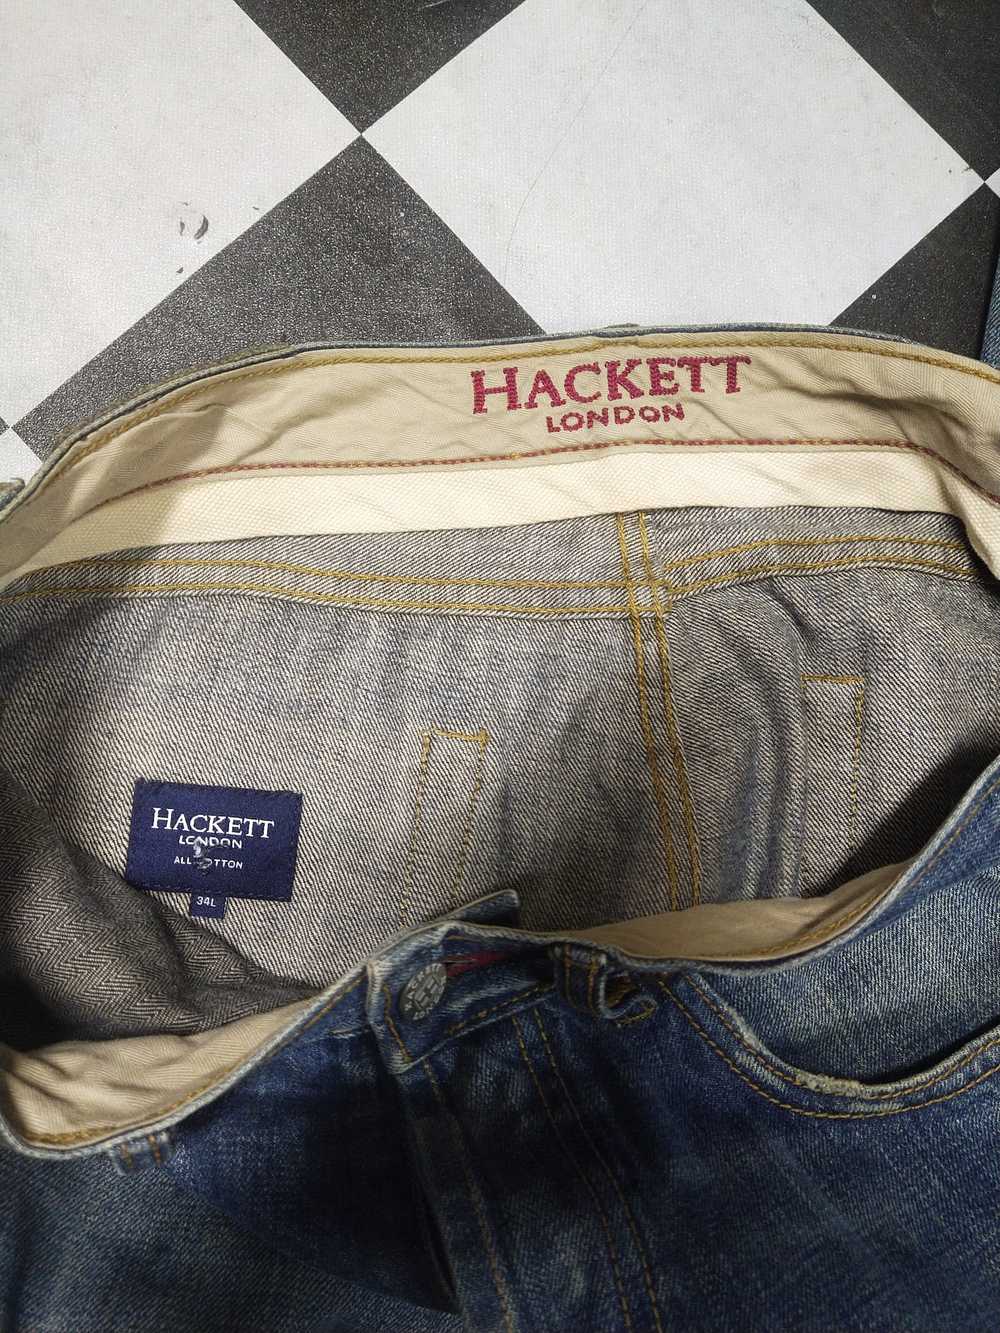 Hackett Hackett London vintage Selvedge denim - image 5